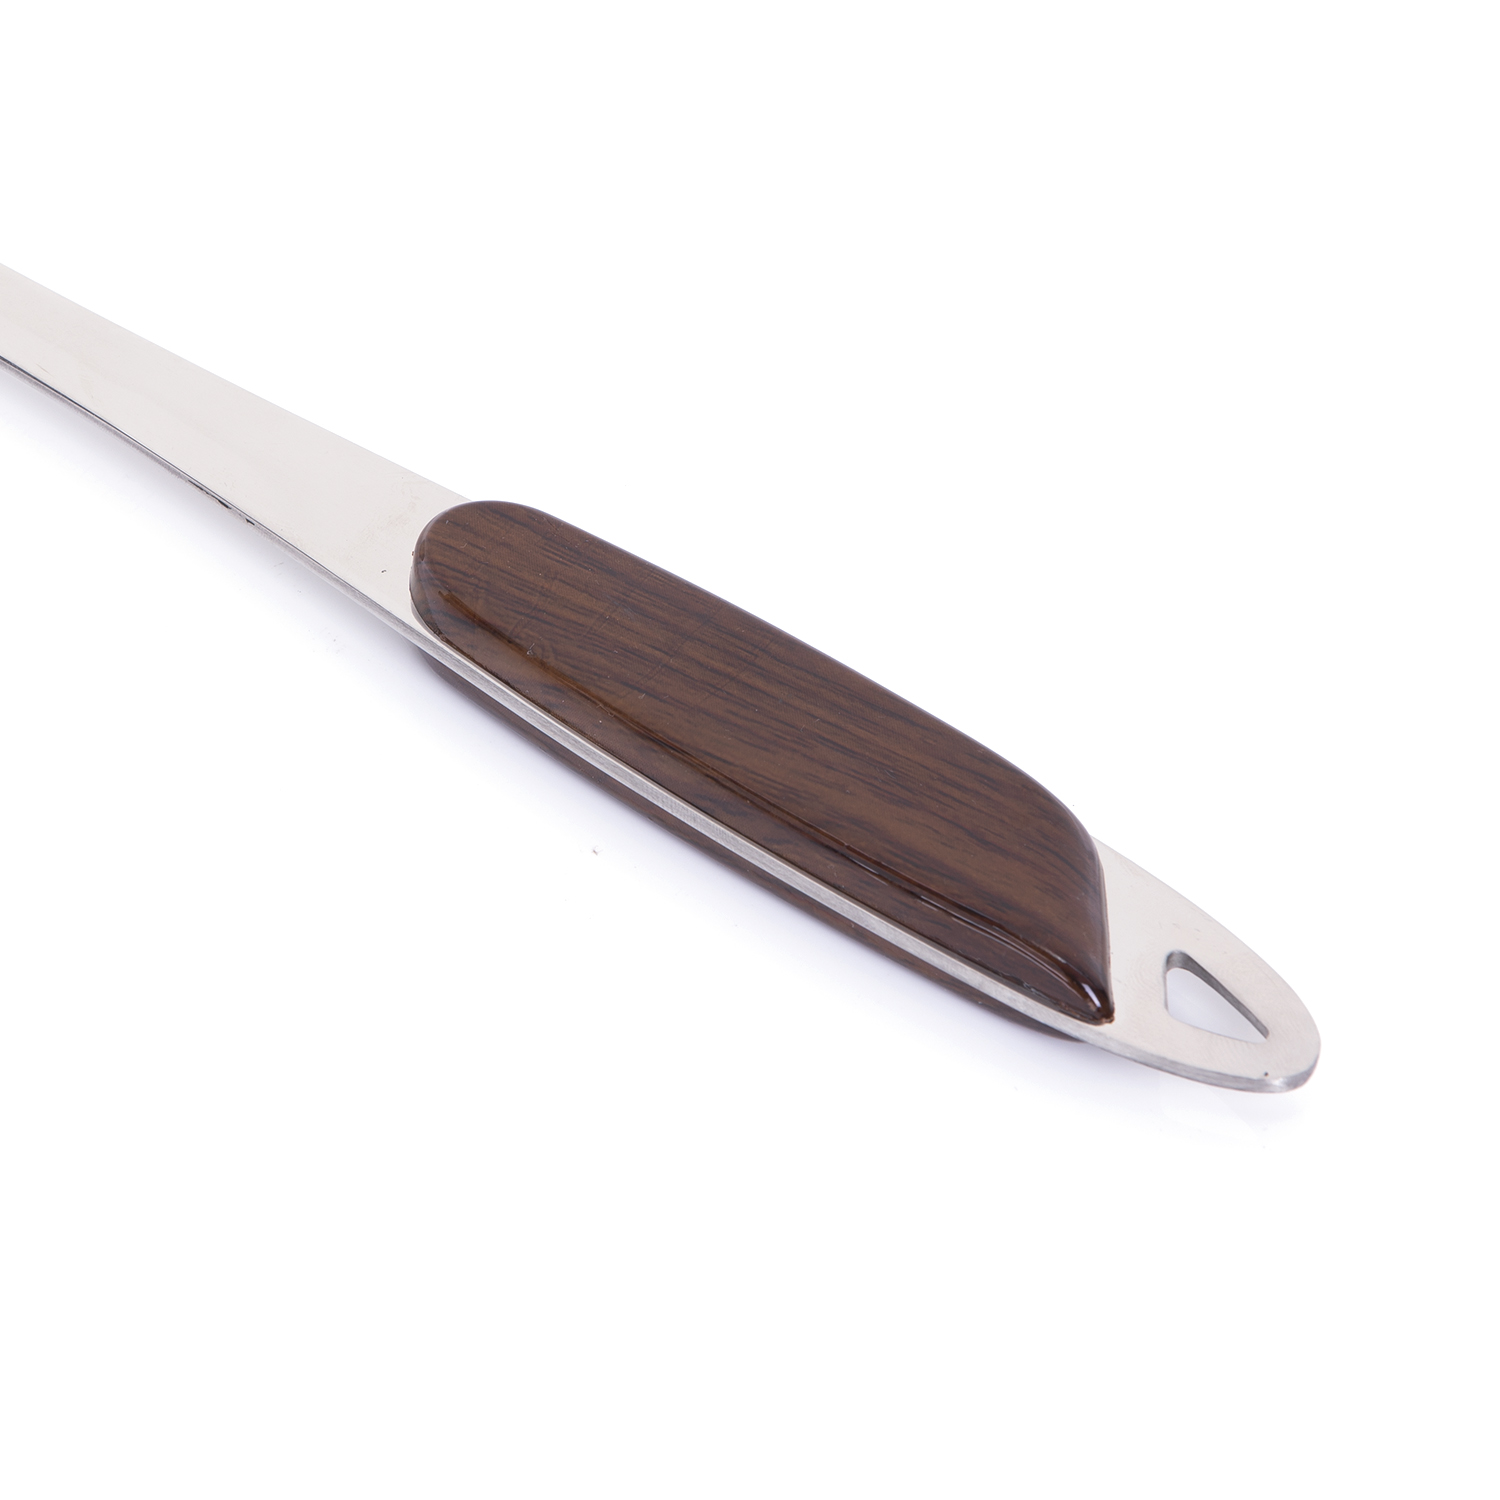 Fahnenstock Wax Knife 17.5cm Large